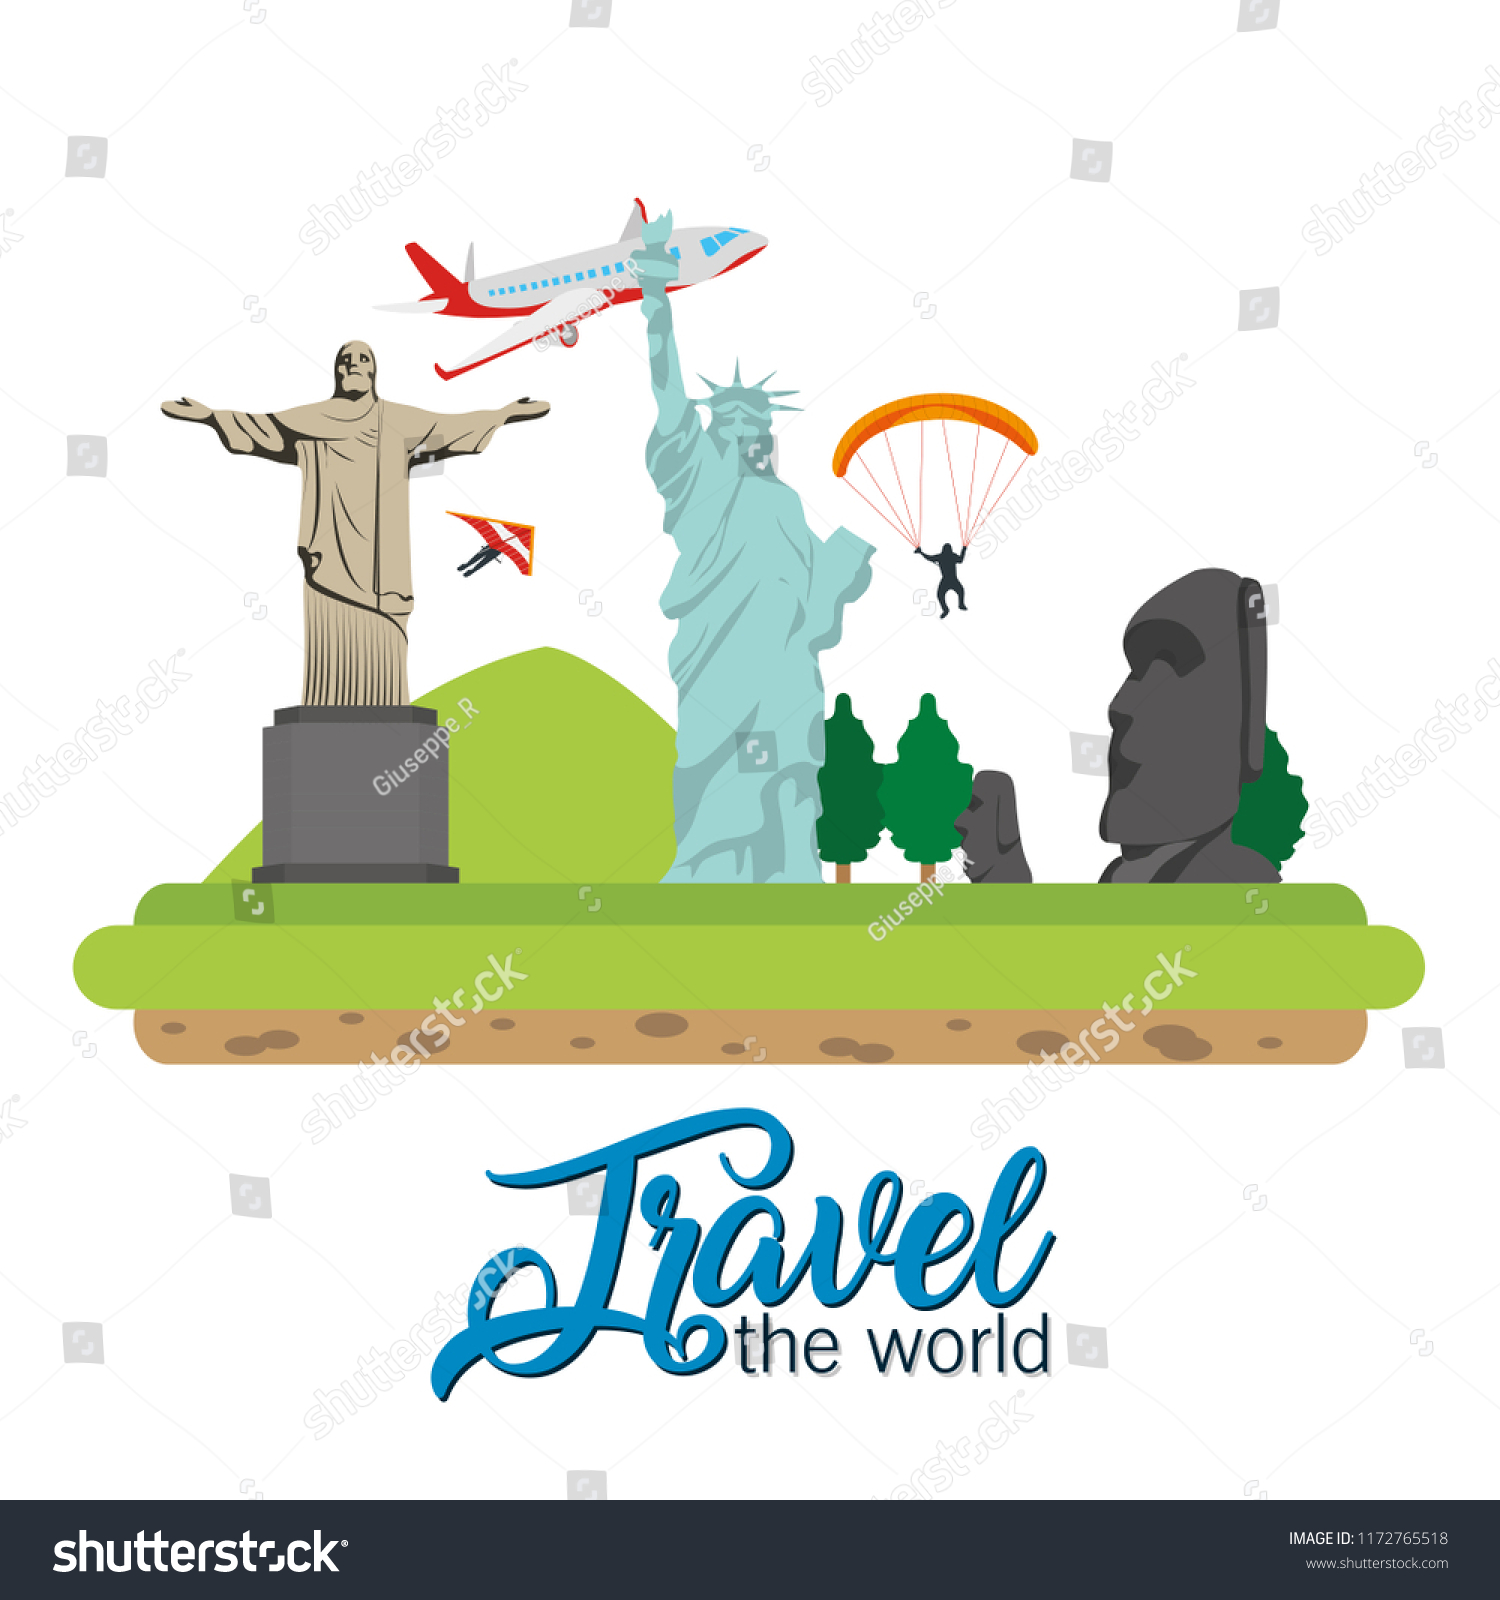 SVG of Travel the world svg